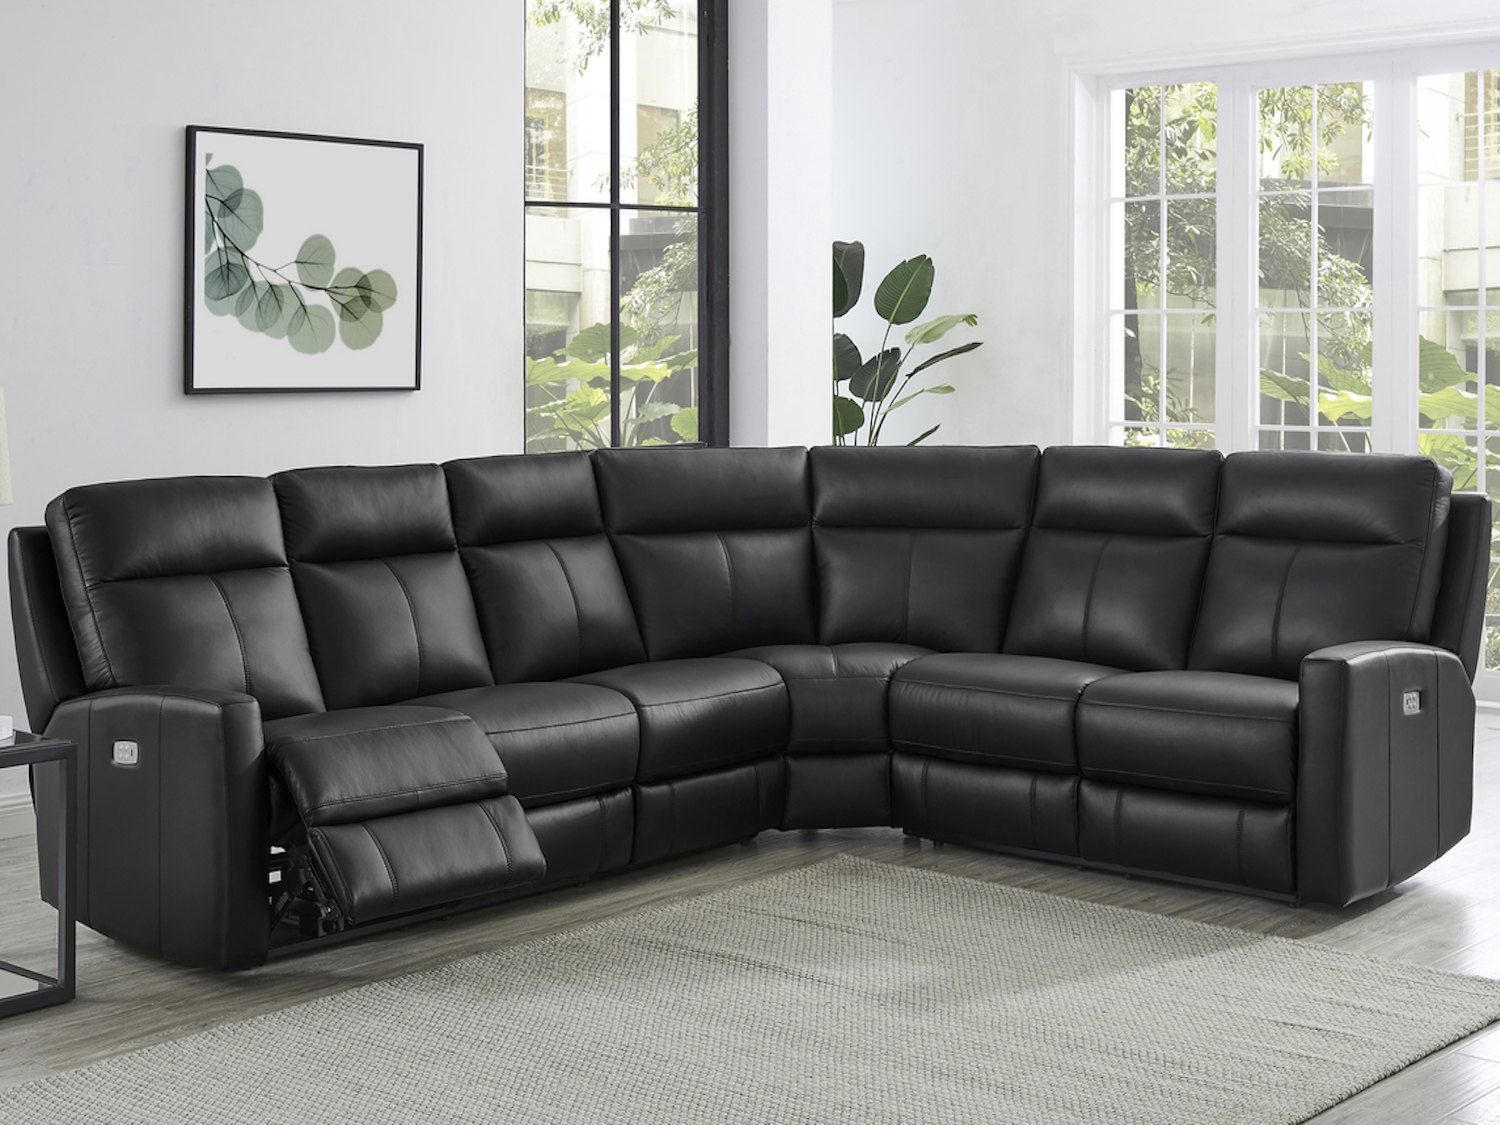 3 pc genuine leather sofa set